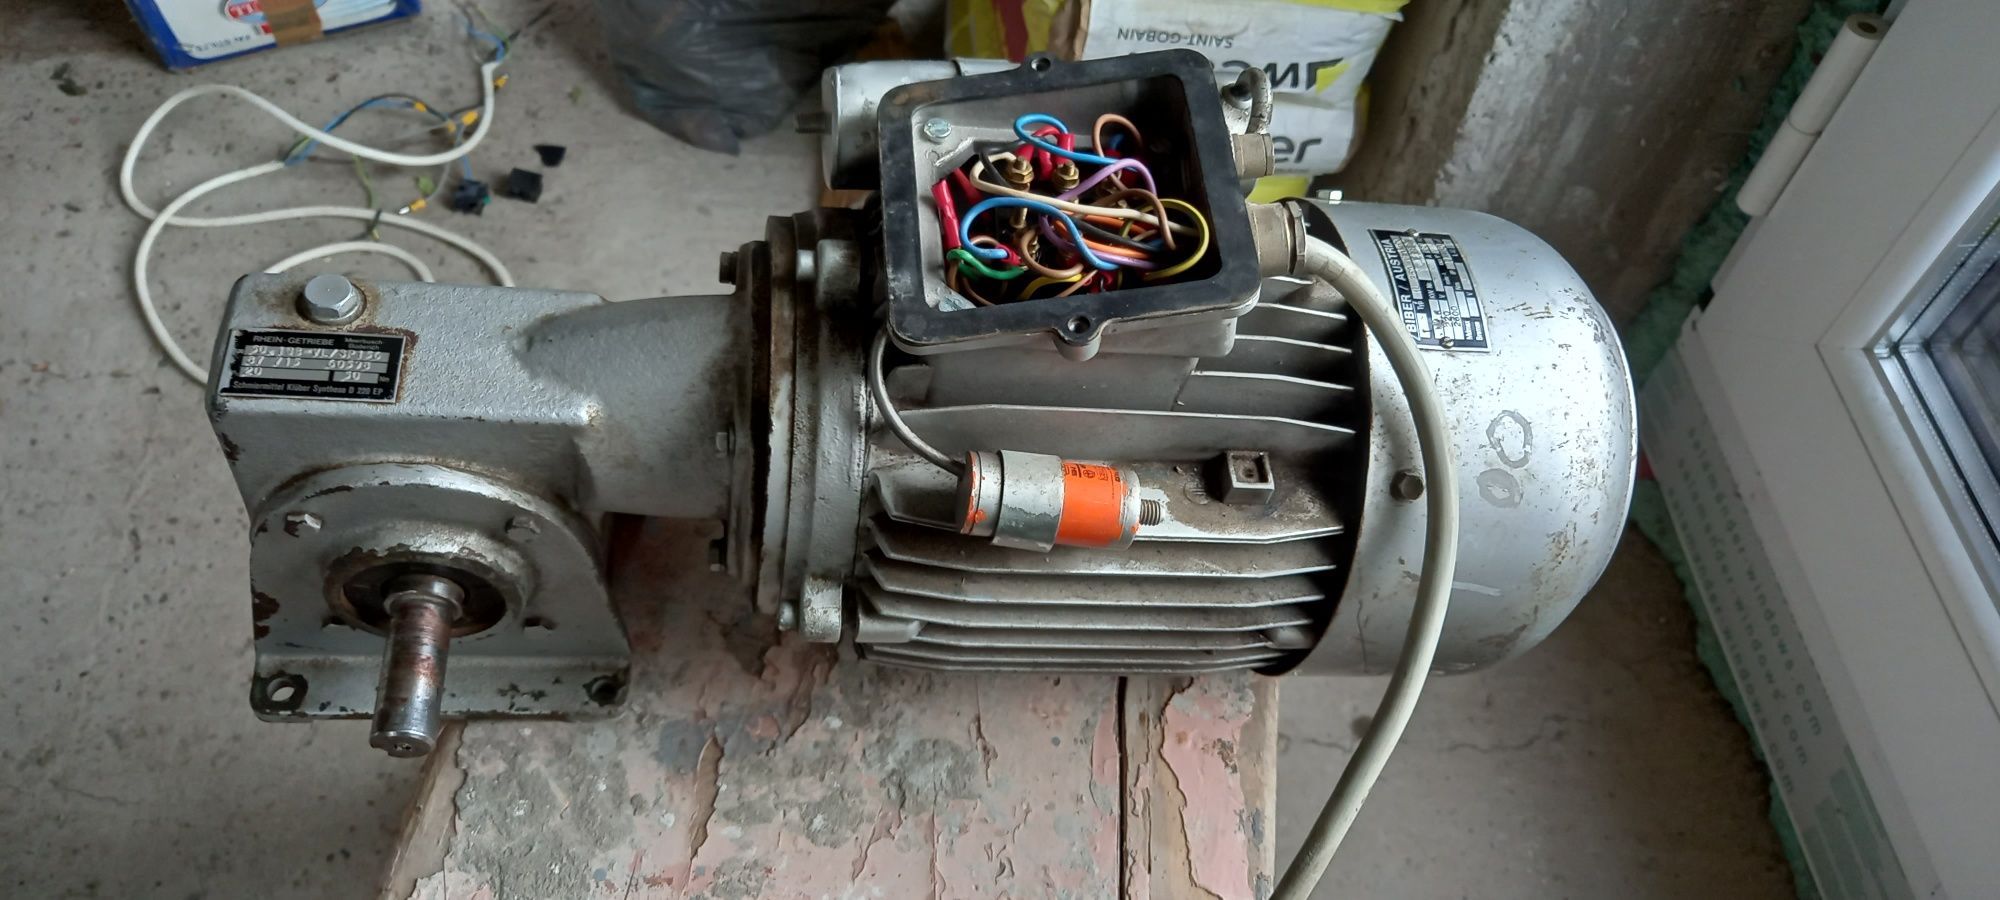 Motor electric melcat 220v